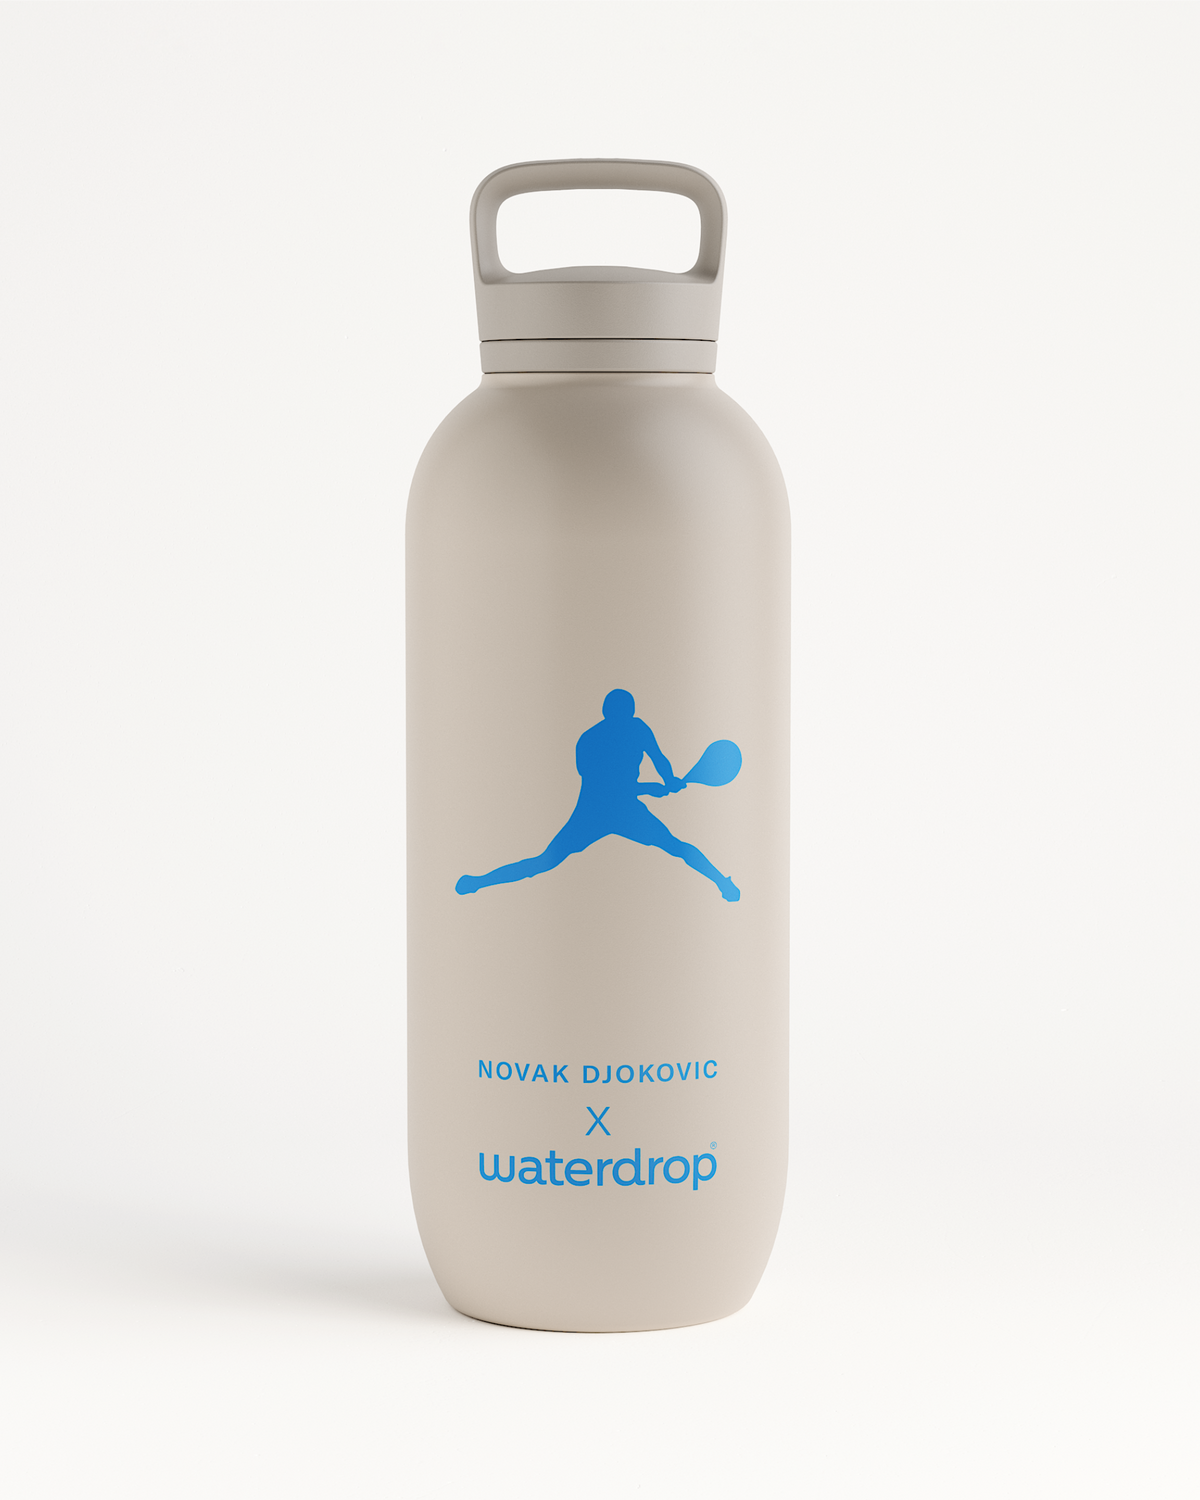 waterdrop® welcomes Novak Djokovic